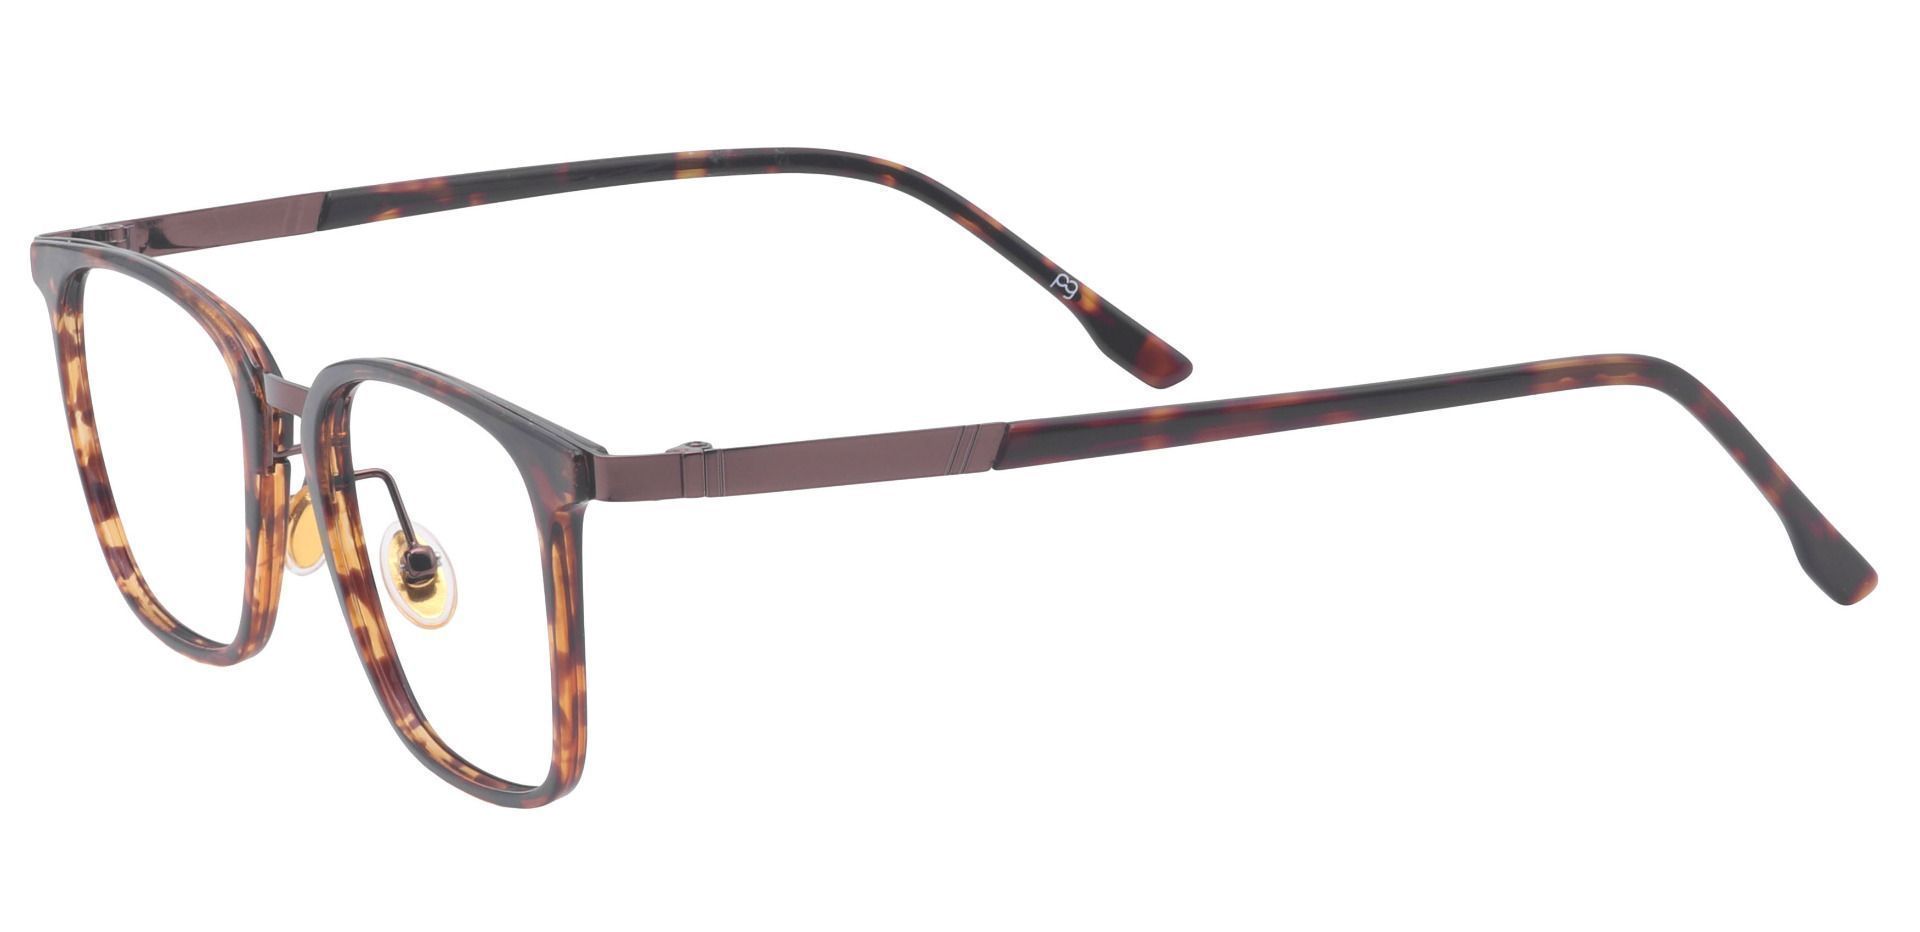 Rigby Oval Progressive Glasses - Leopard